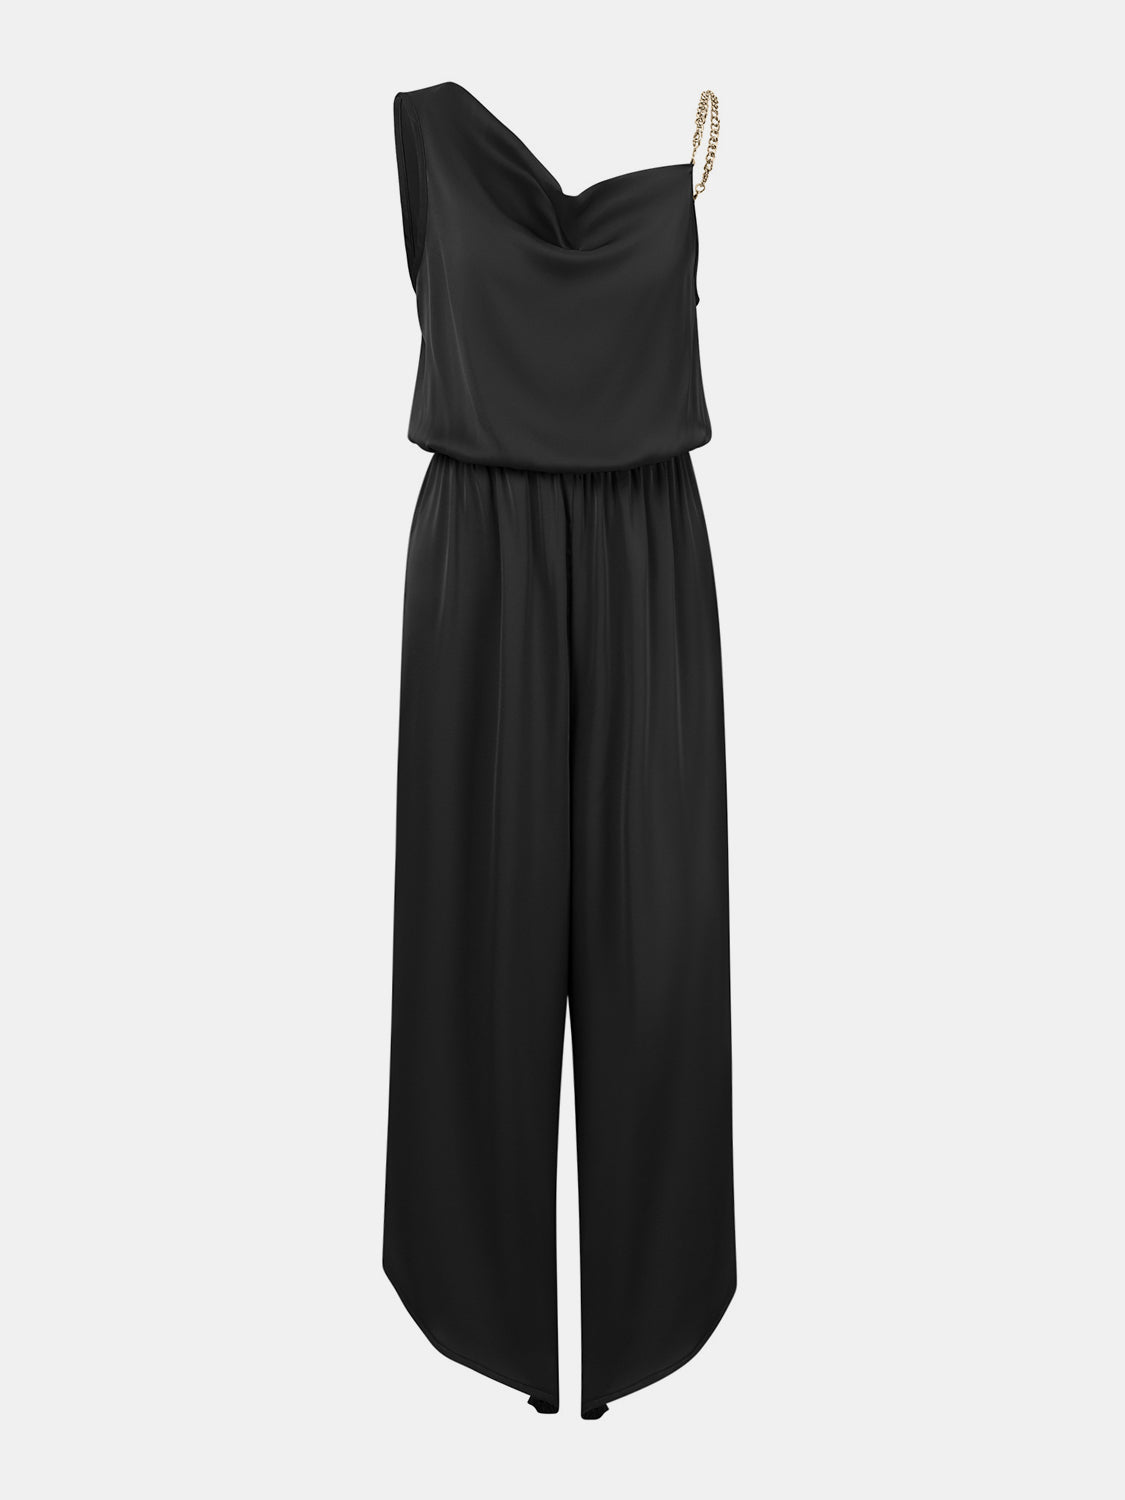 Women's Clothing, Chain Detail Asymmetrical Neck Jumpsuit, Front View Right Black, Rochelle's House